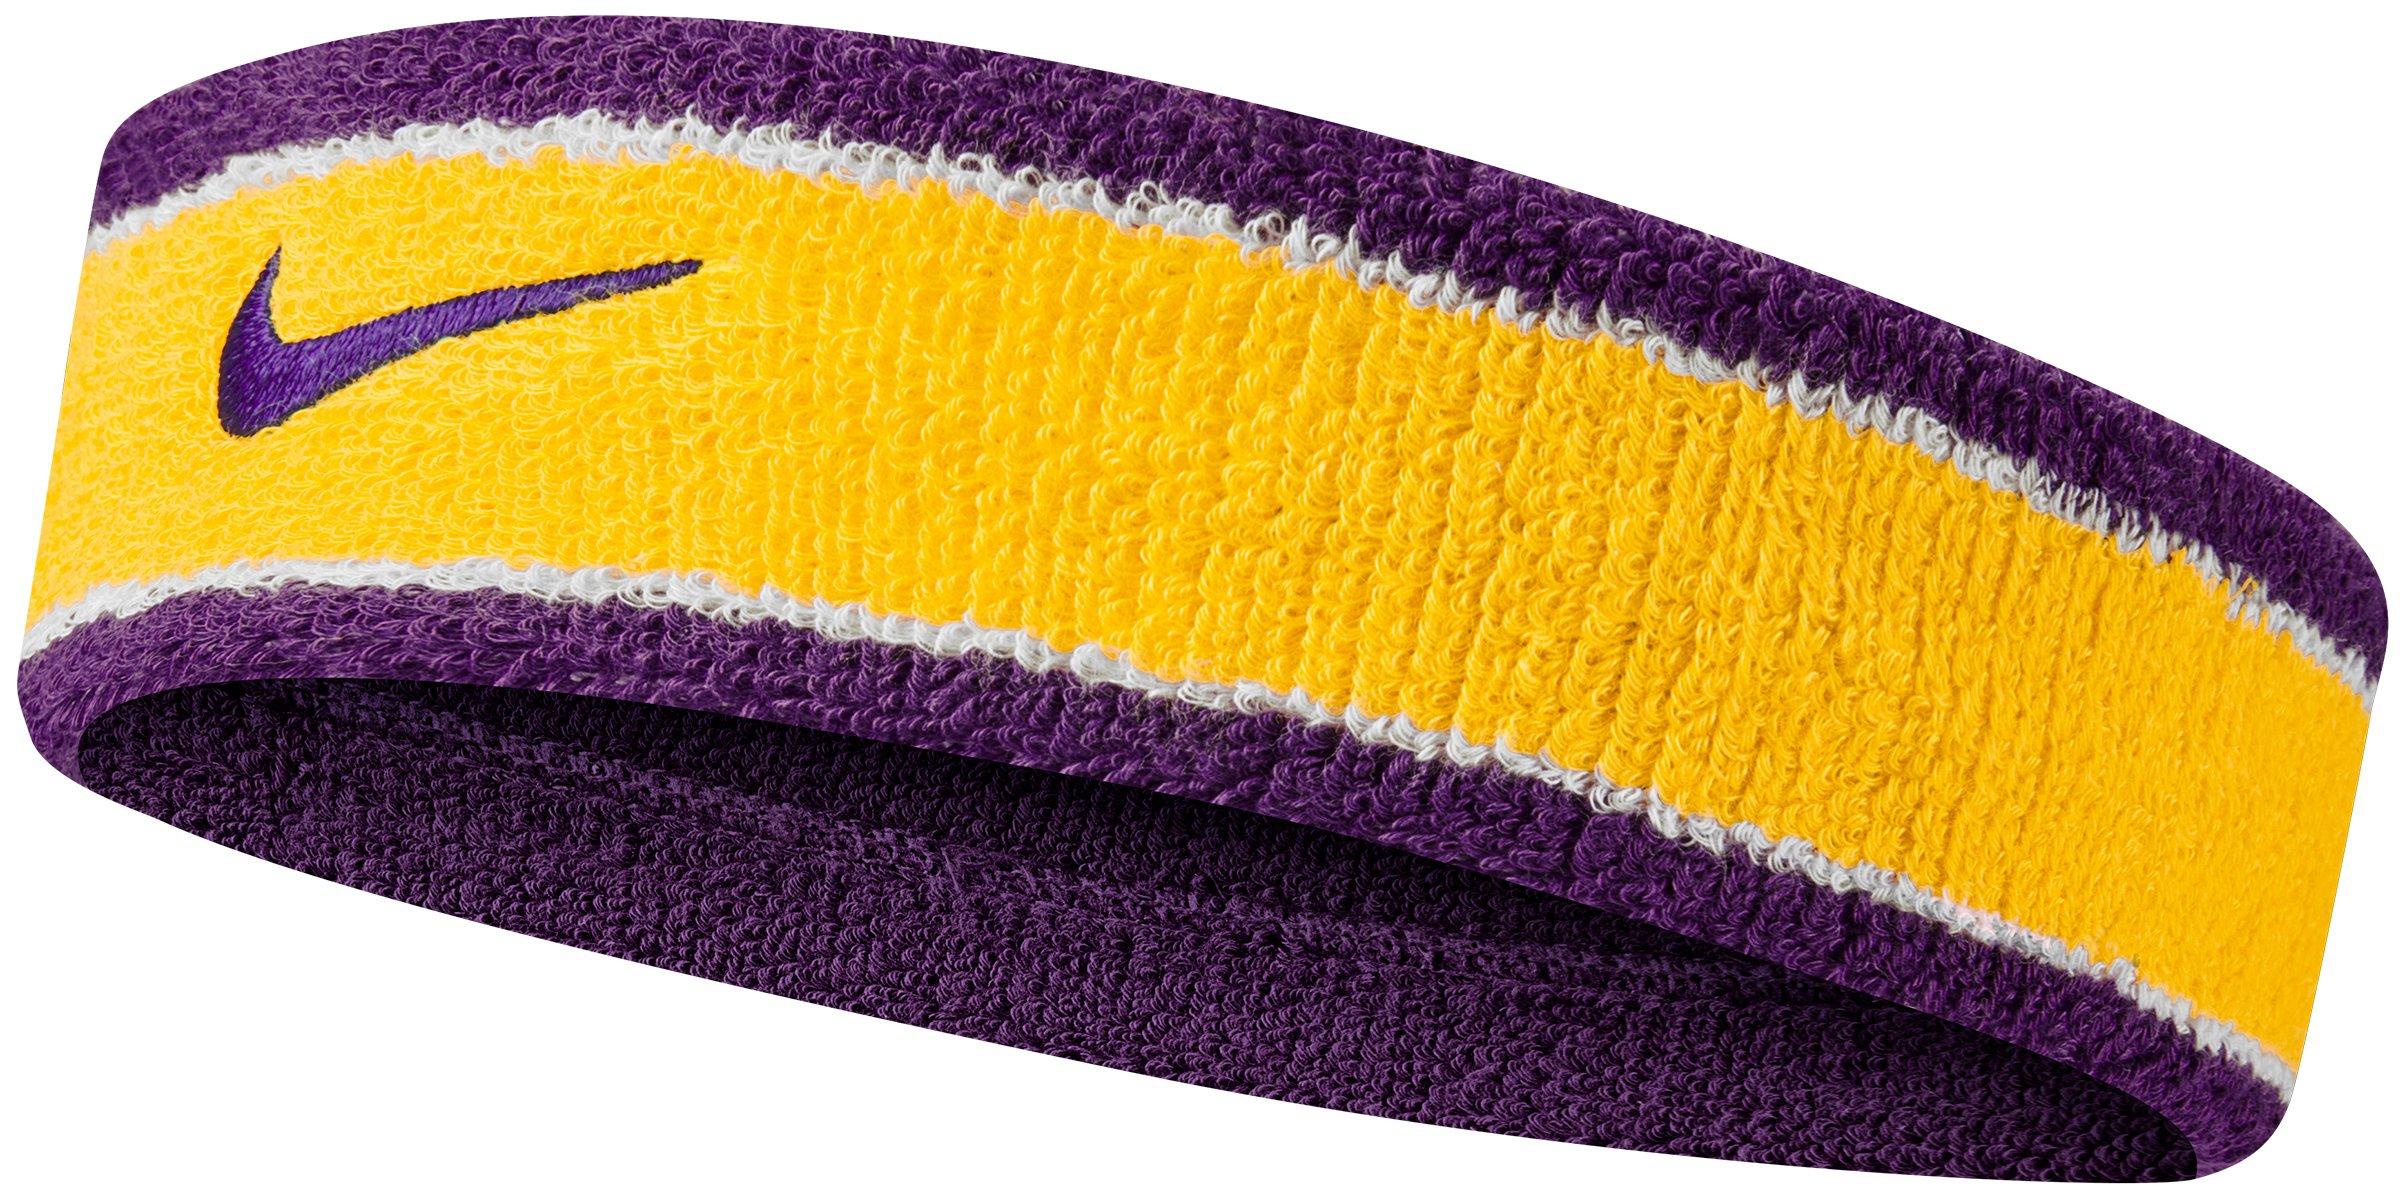 purple jordan headband